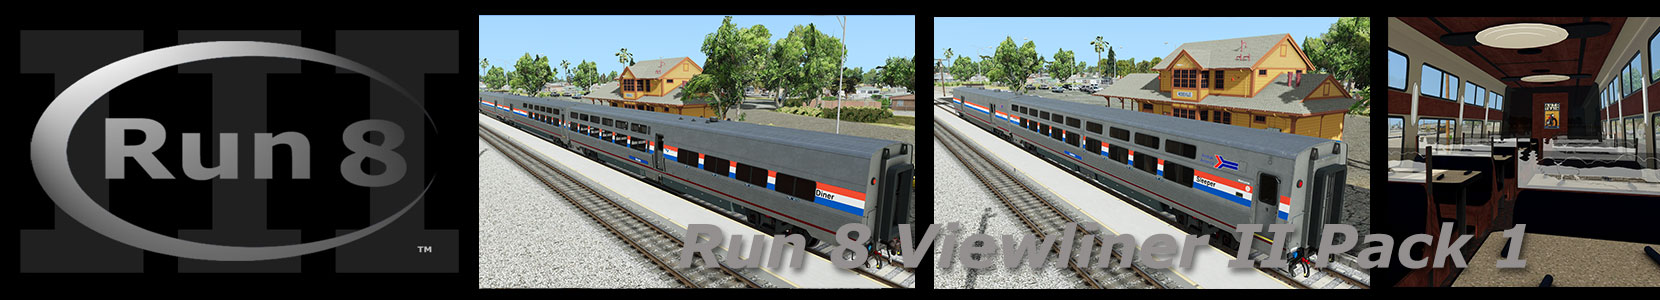 Run8 Train Simulator Amfleet II Pack 1